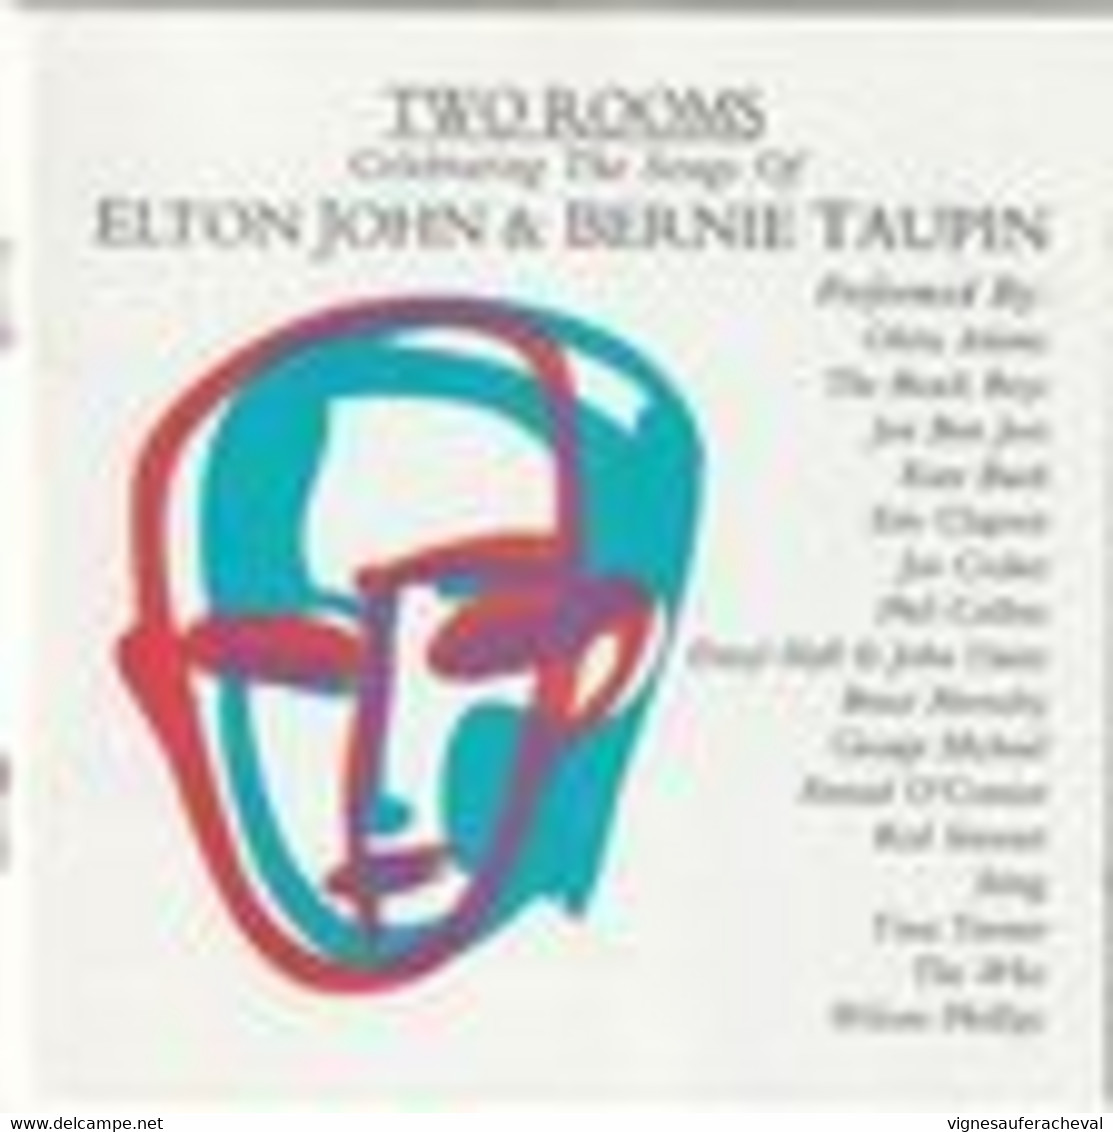 Artistes Variés -Two Rooms Celebrating The Songs Of Elton John & Bernie Taupin - Other - English Music